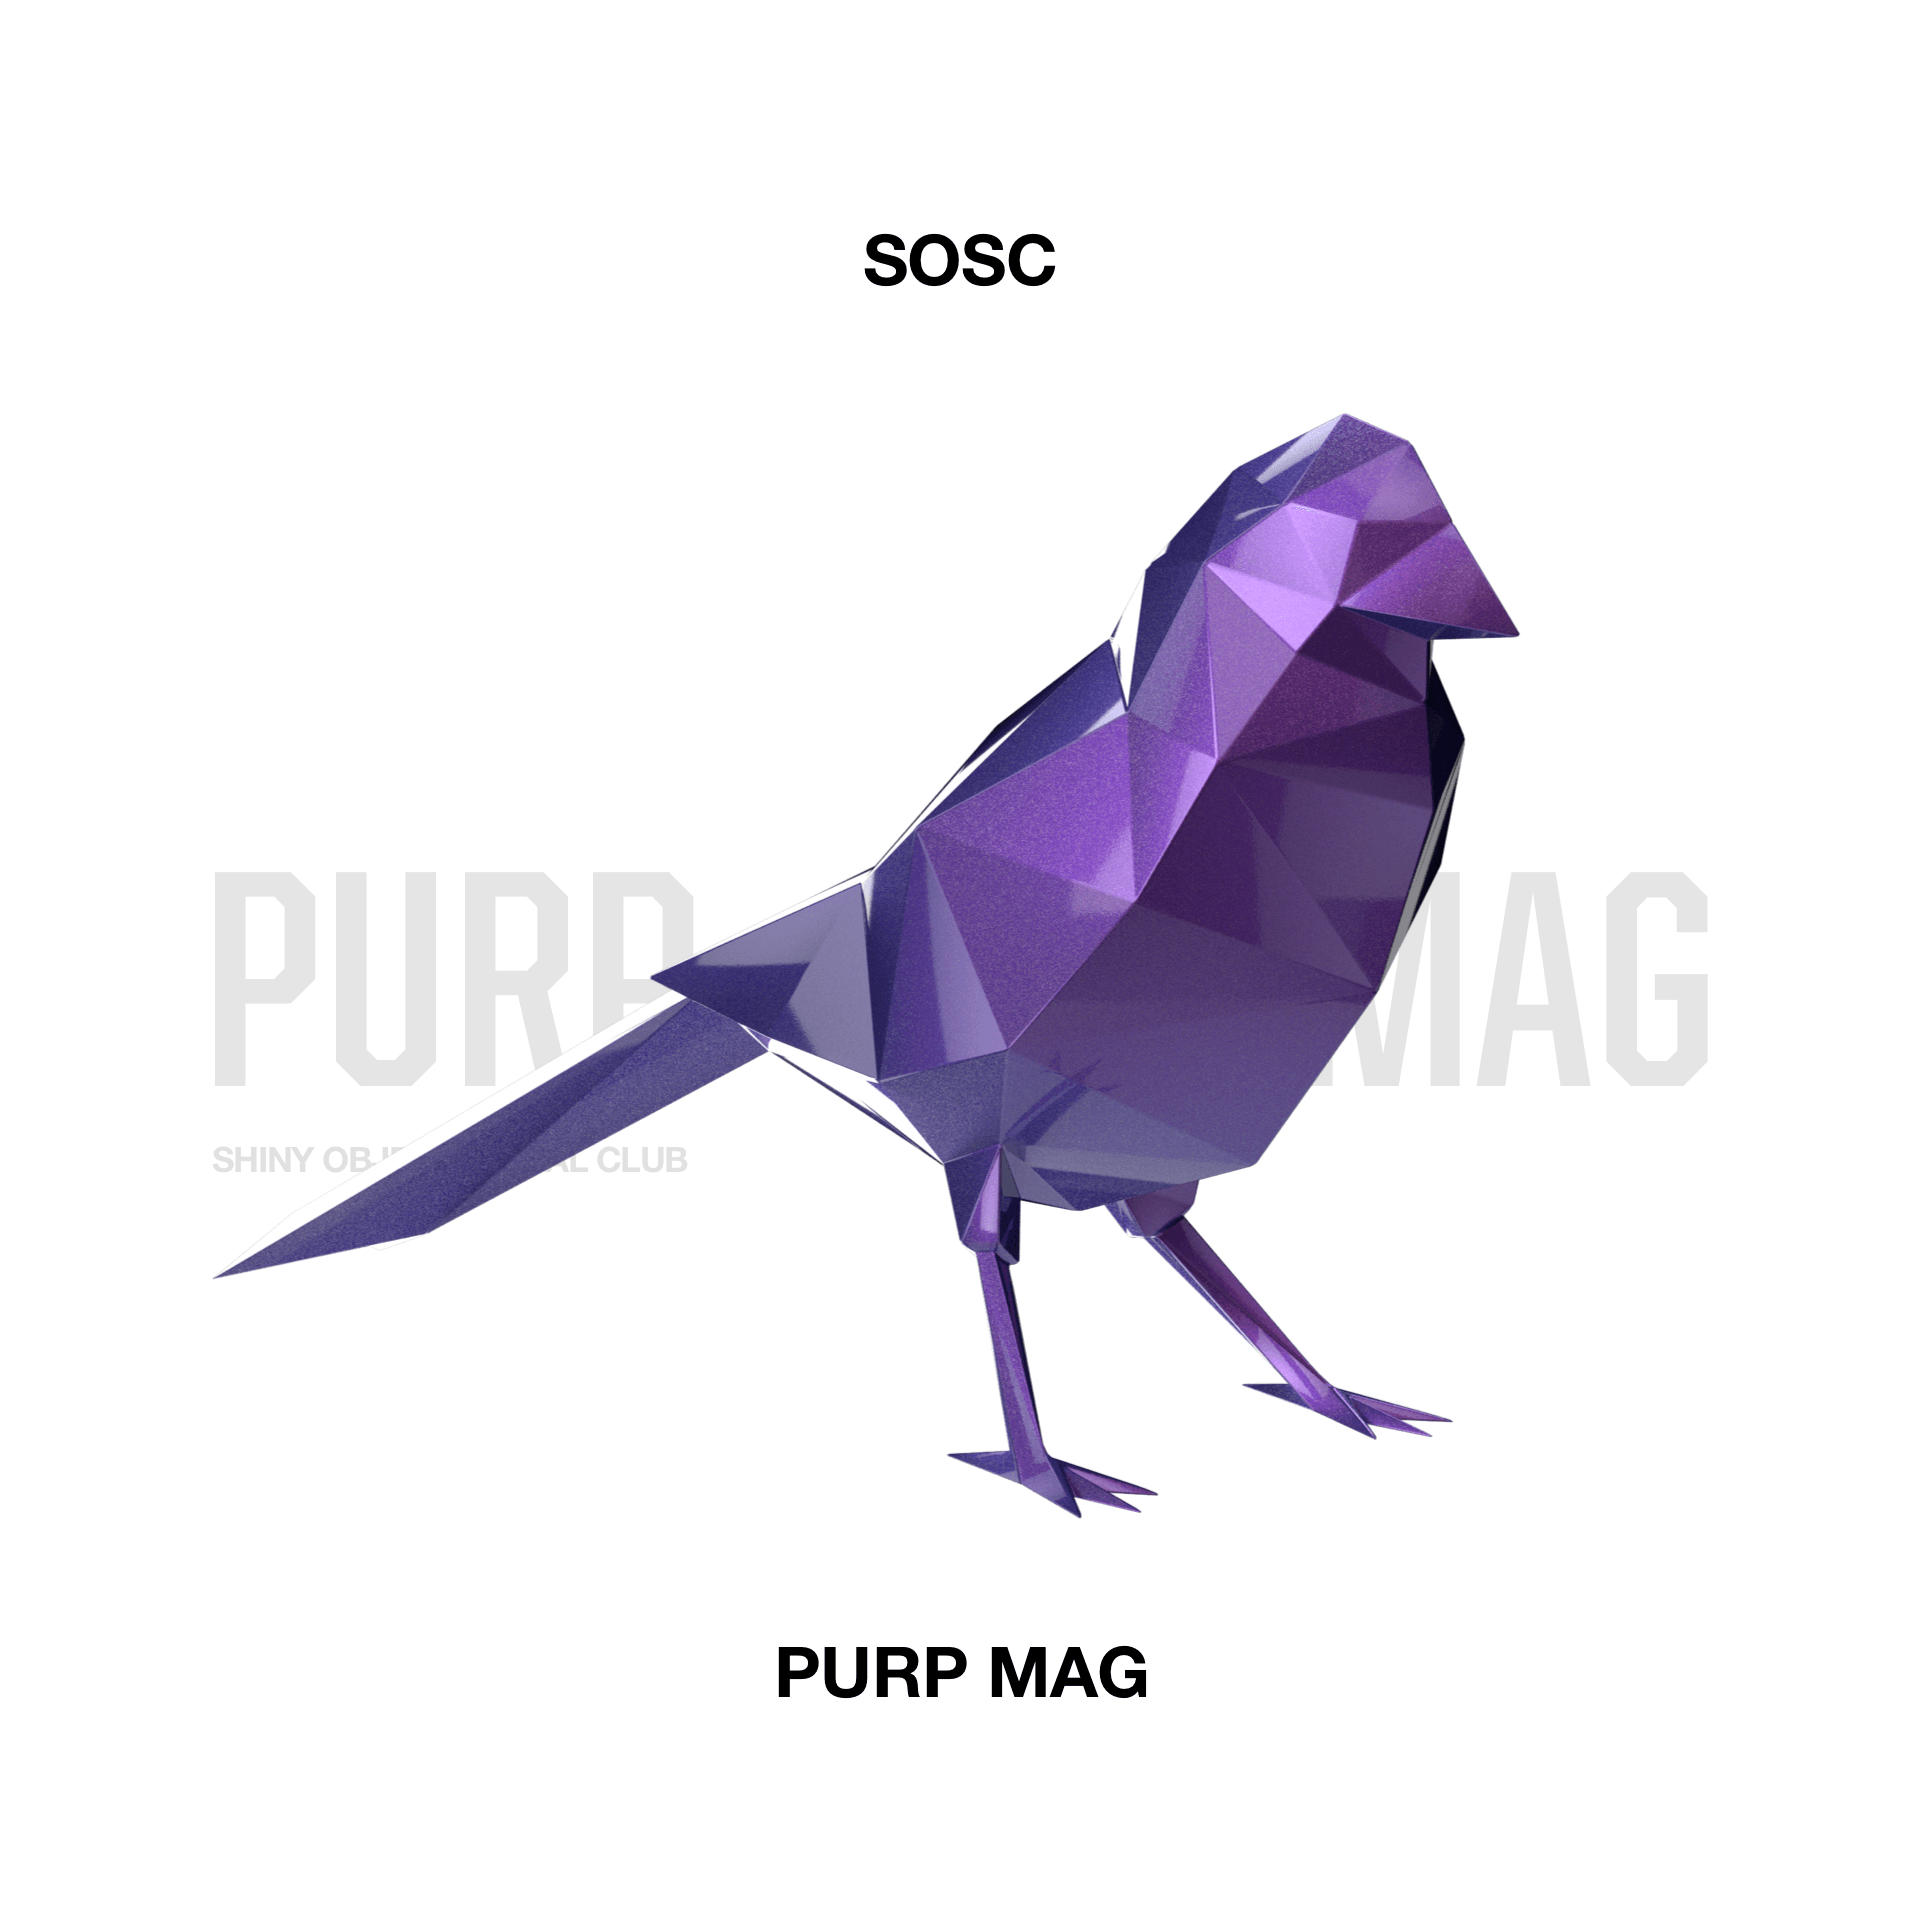 Purp Mag